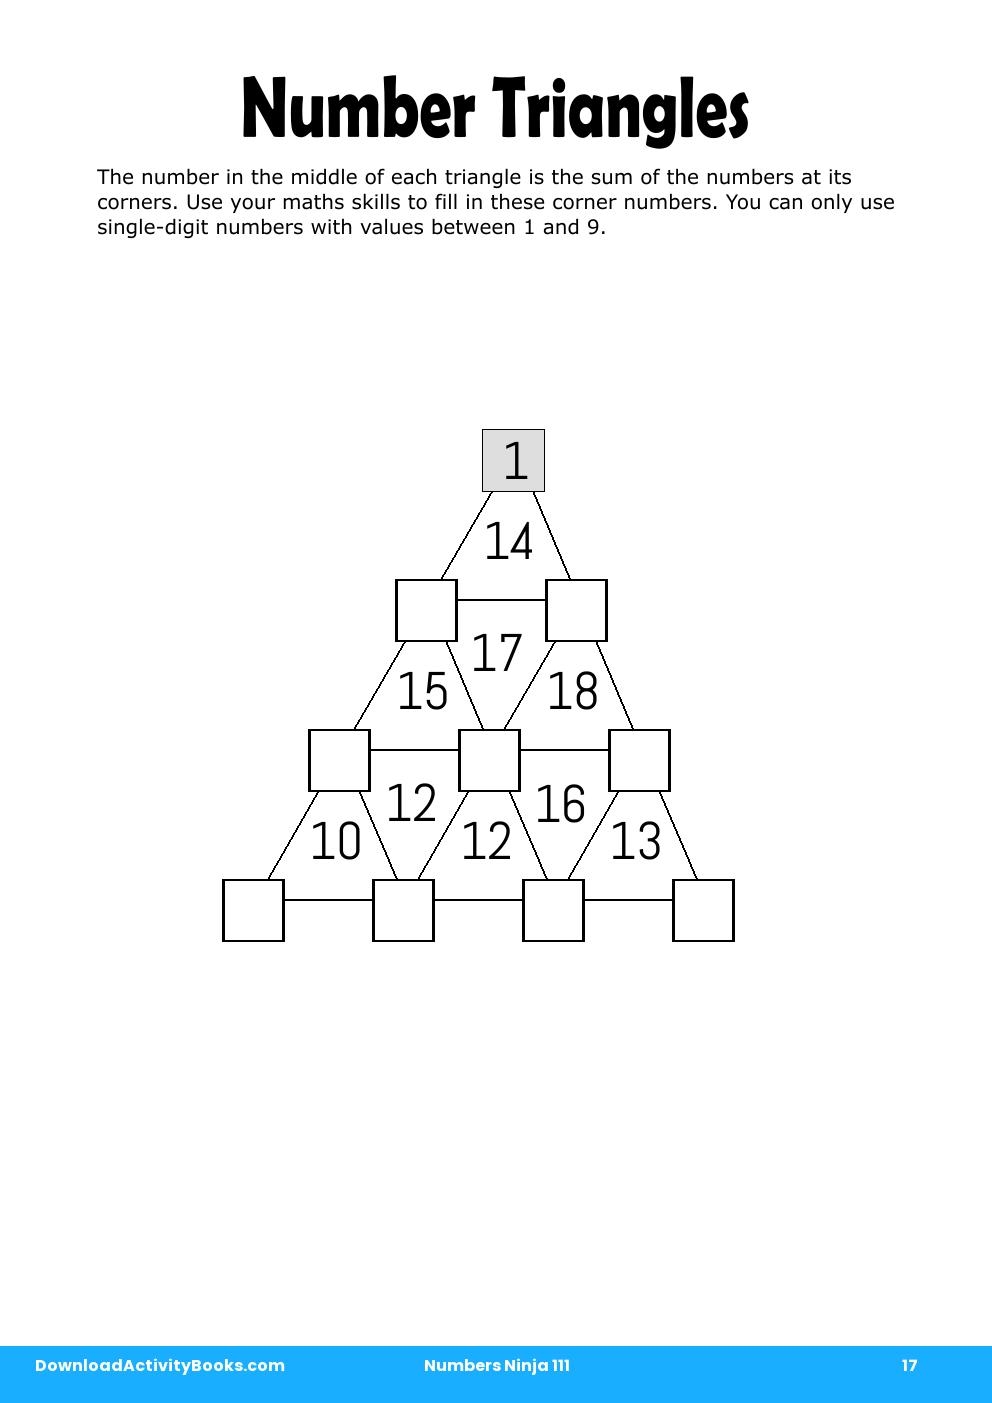 Number Triangles in Numbers Ninja 111